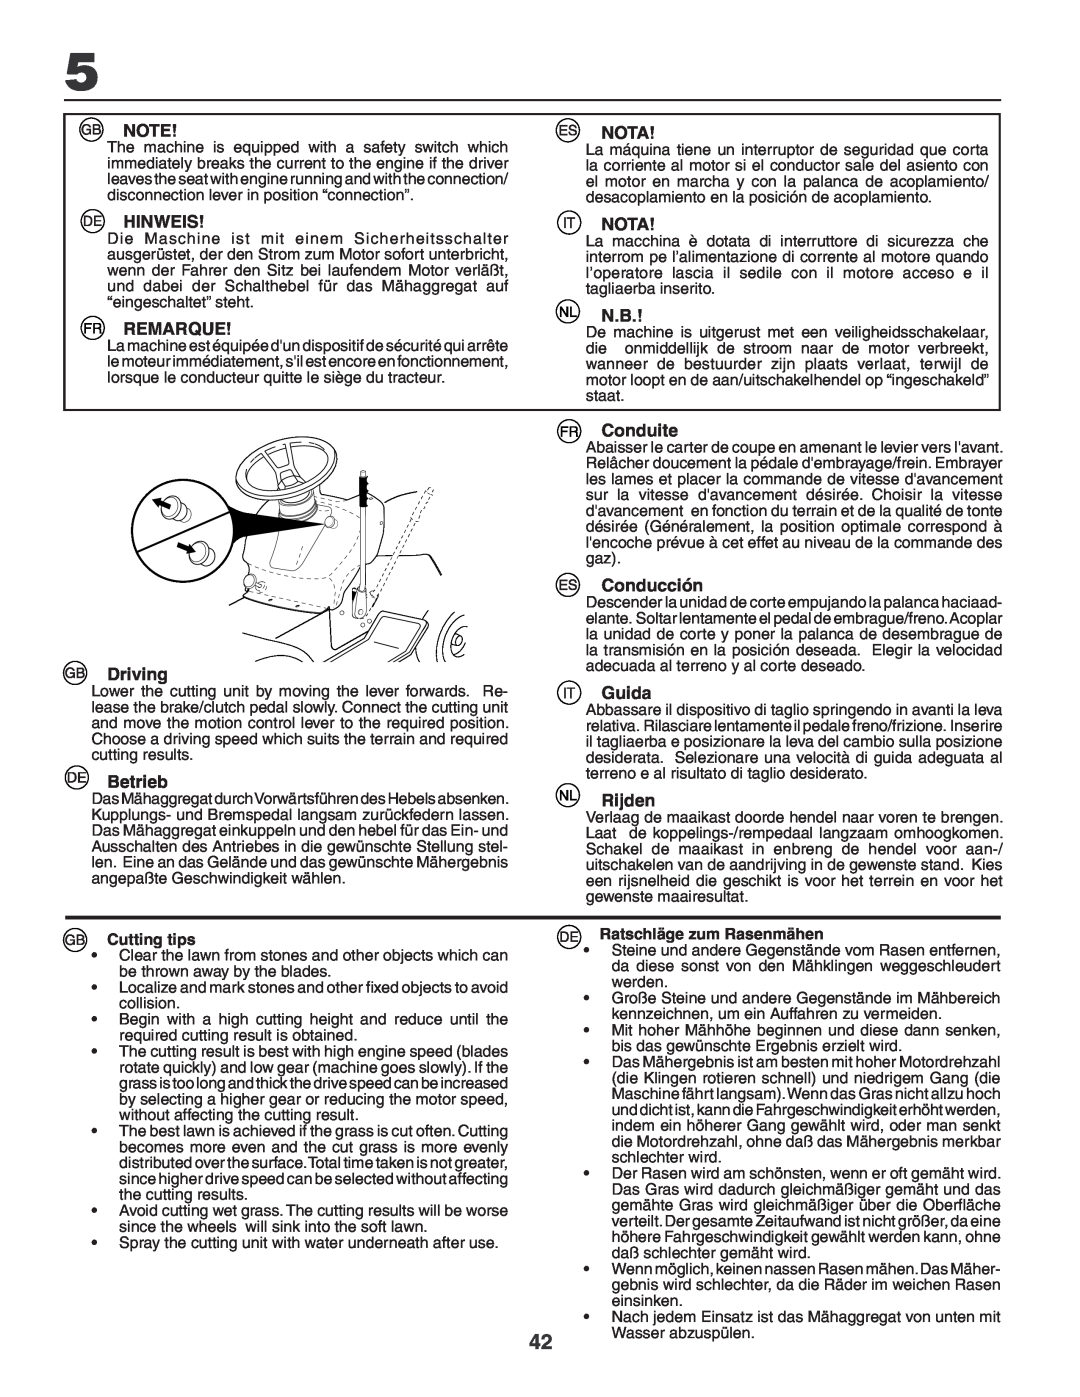 Husqvarna YTH180XP instruction manual Hinweis, Remarque, Nota, Driving, Betrieb, Conduite, Conducción, Guida, Rijden 